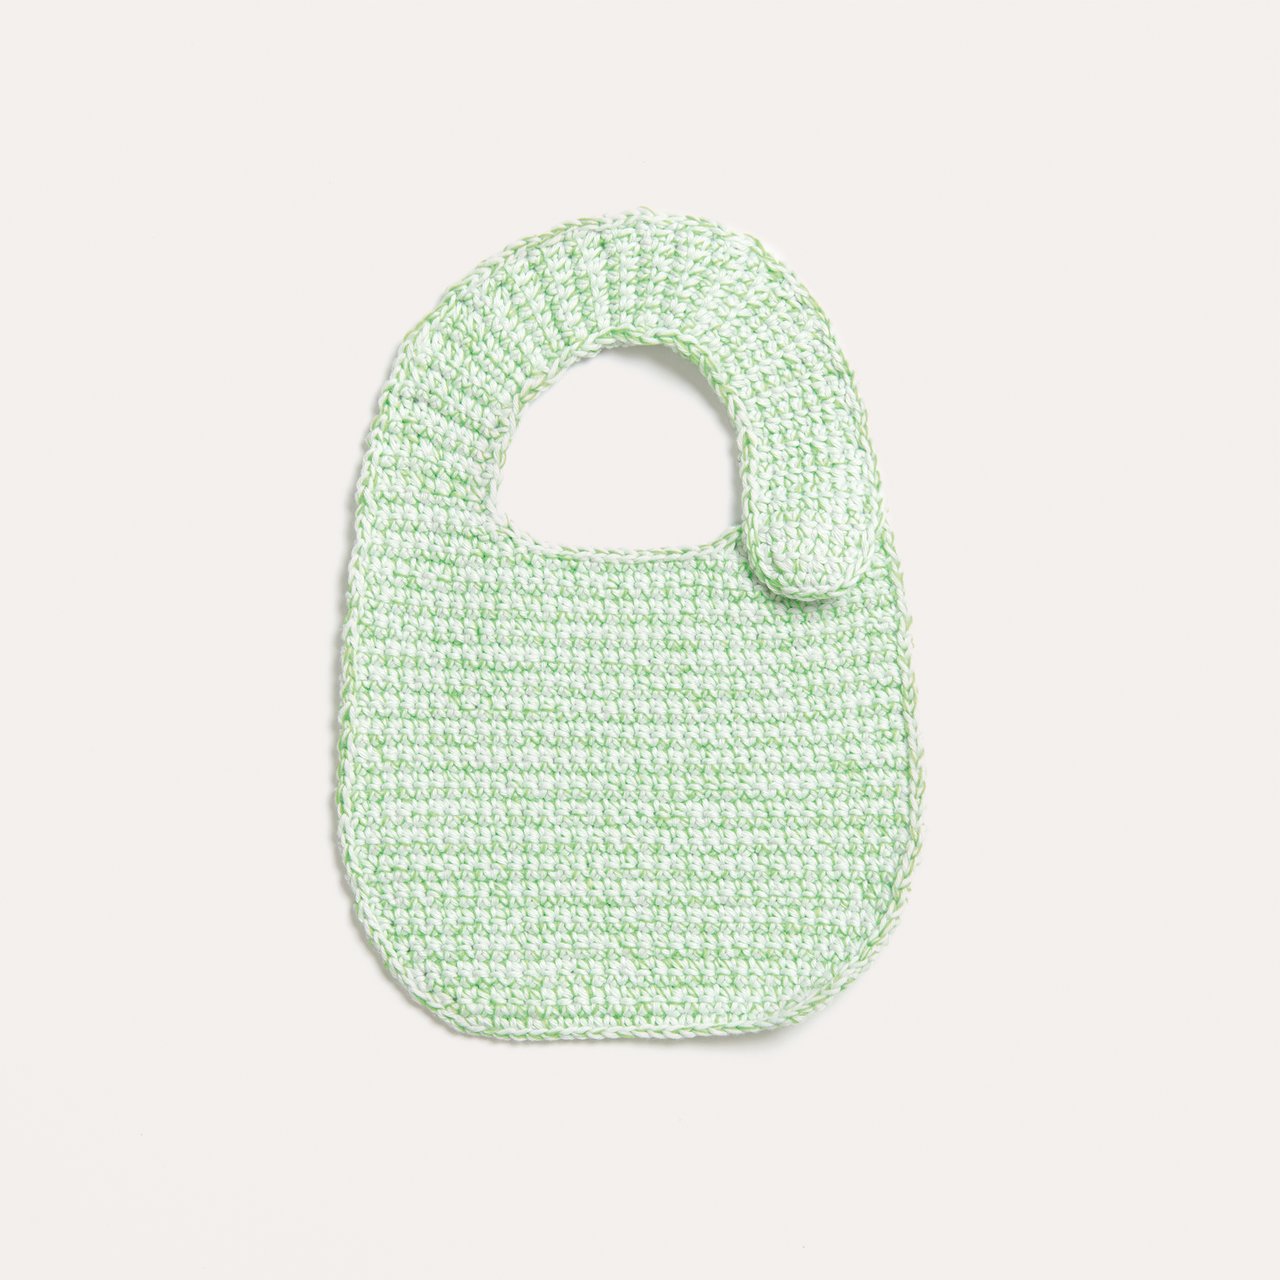 Häkelset Lätzchen Modell 16 aus Baby Nr. 36 pastellgrün/neon grün